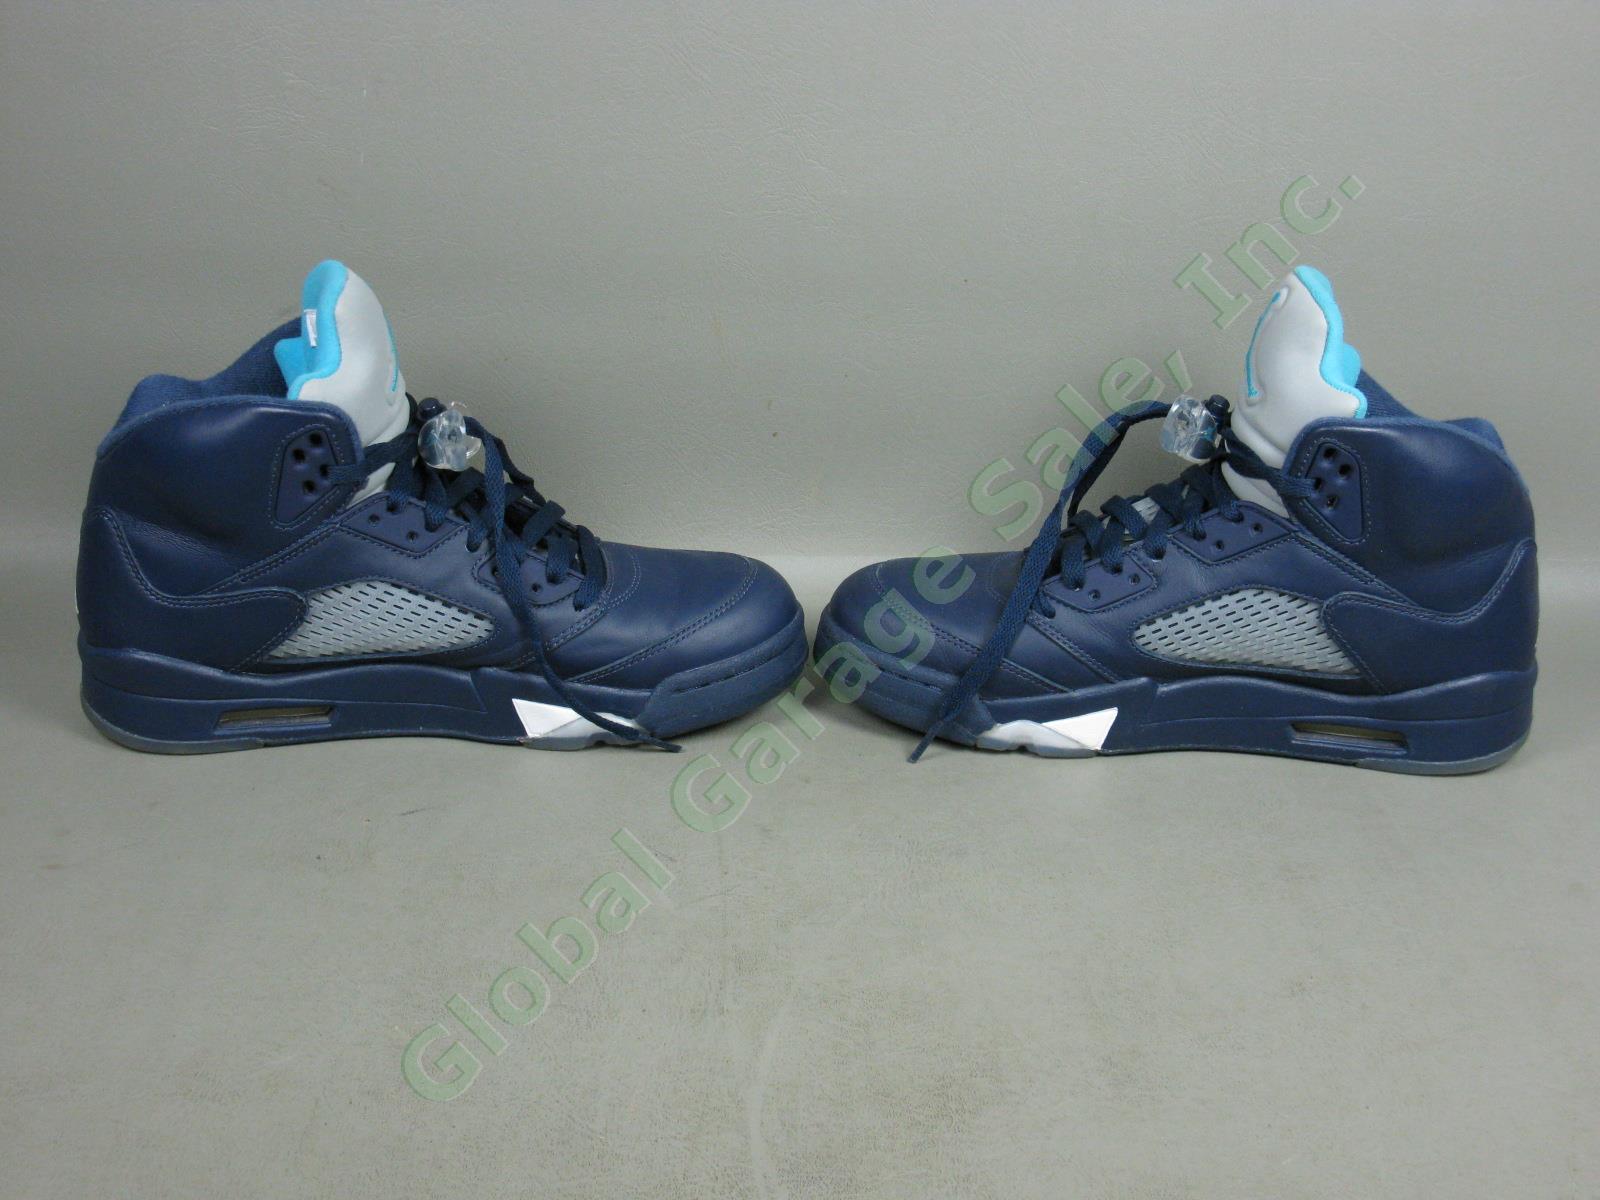 Nike Air Jordan 5 V Retro Hornets Shoes Midnight Navy Blue White 136027-405 Sz 9 3